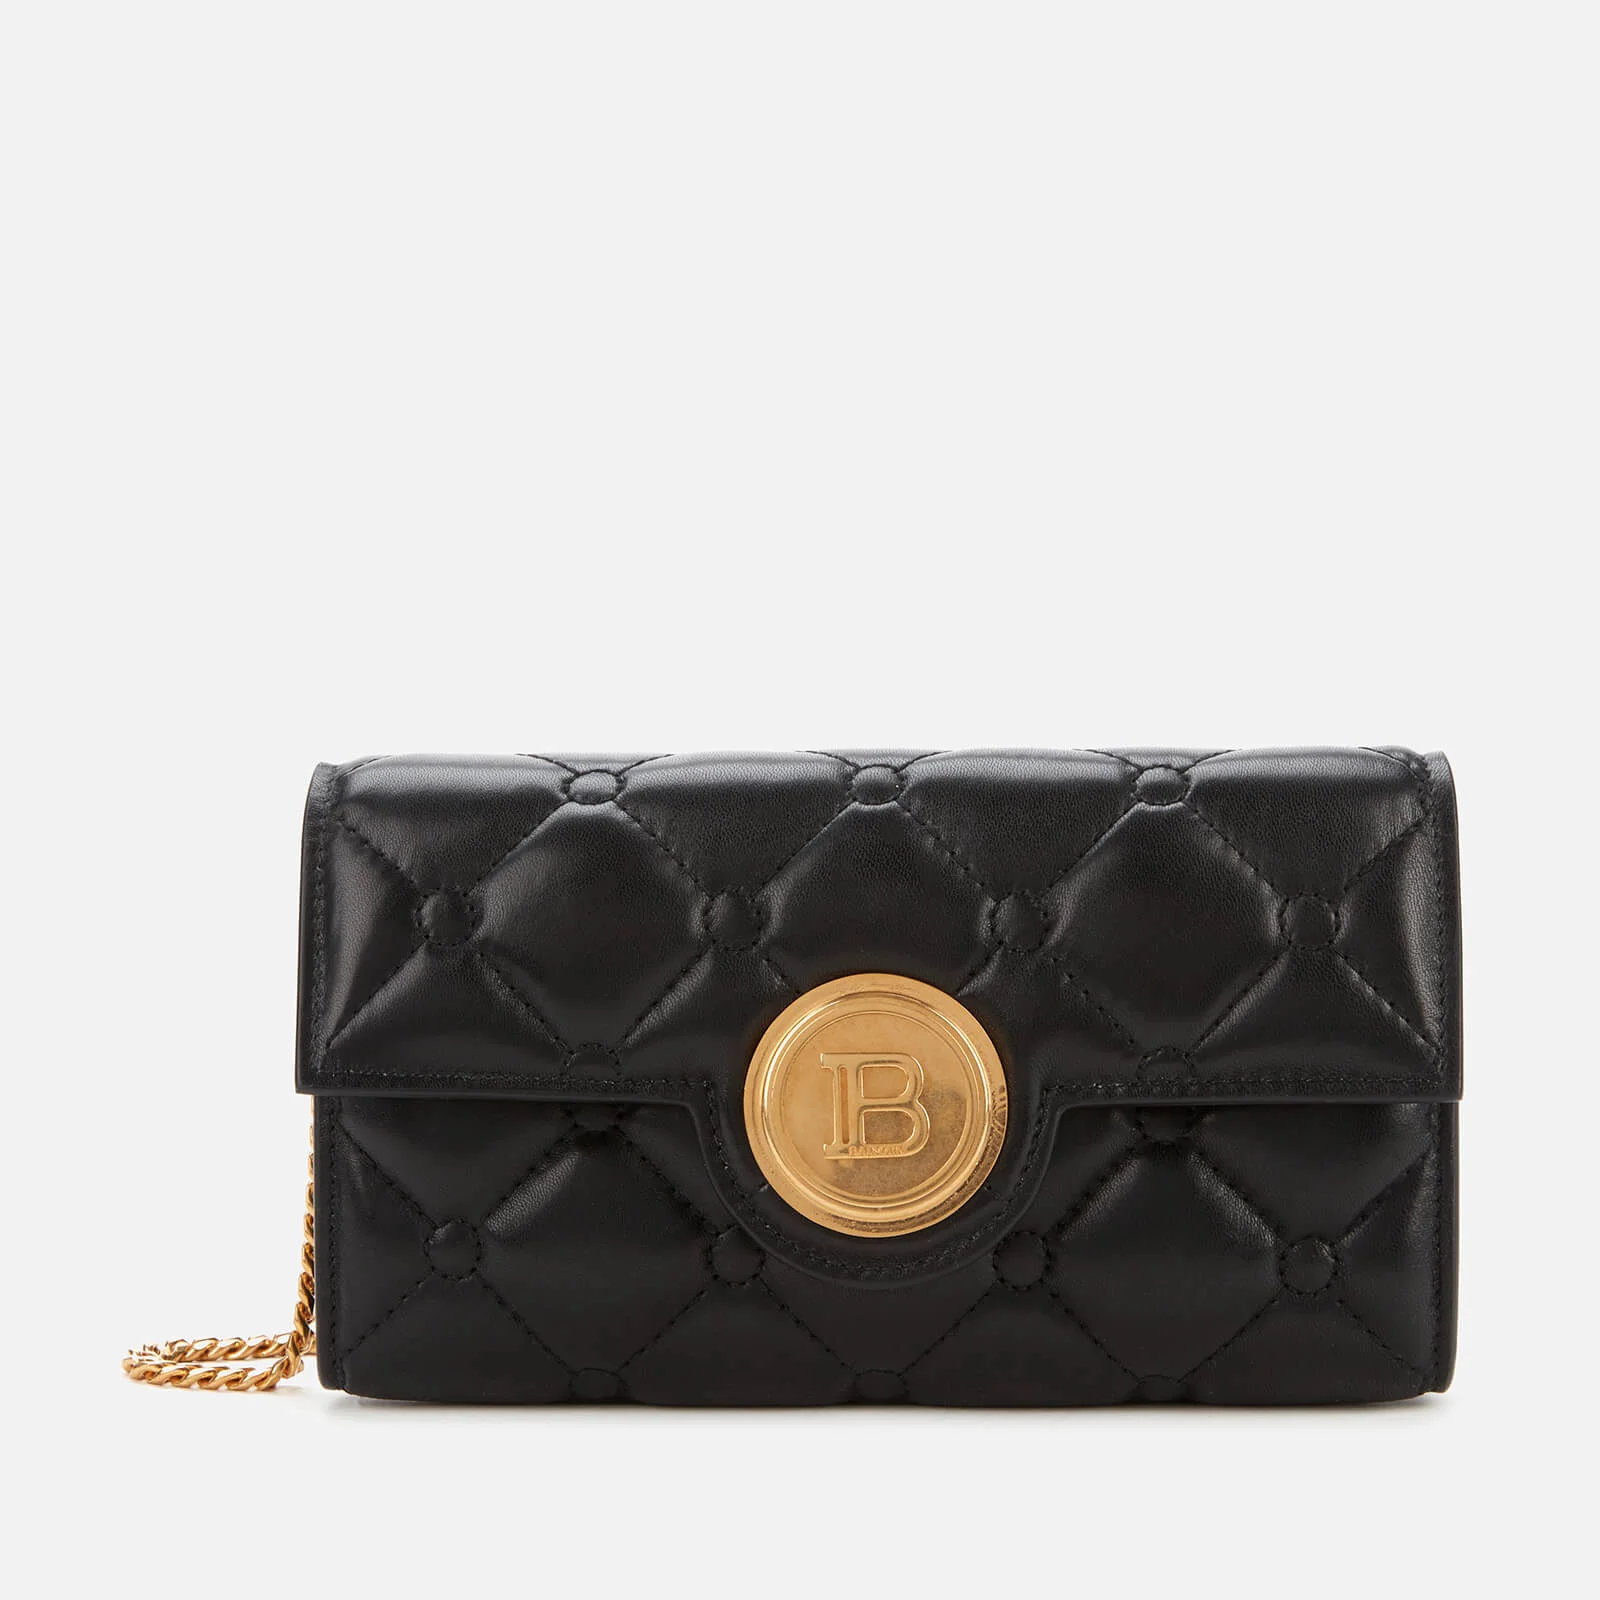 Balmain Women's Agneau Matelasse Quilted Wallet on Chain Bag - Black Image 1